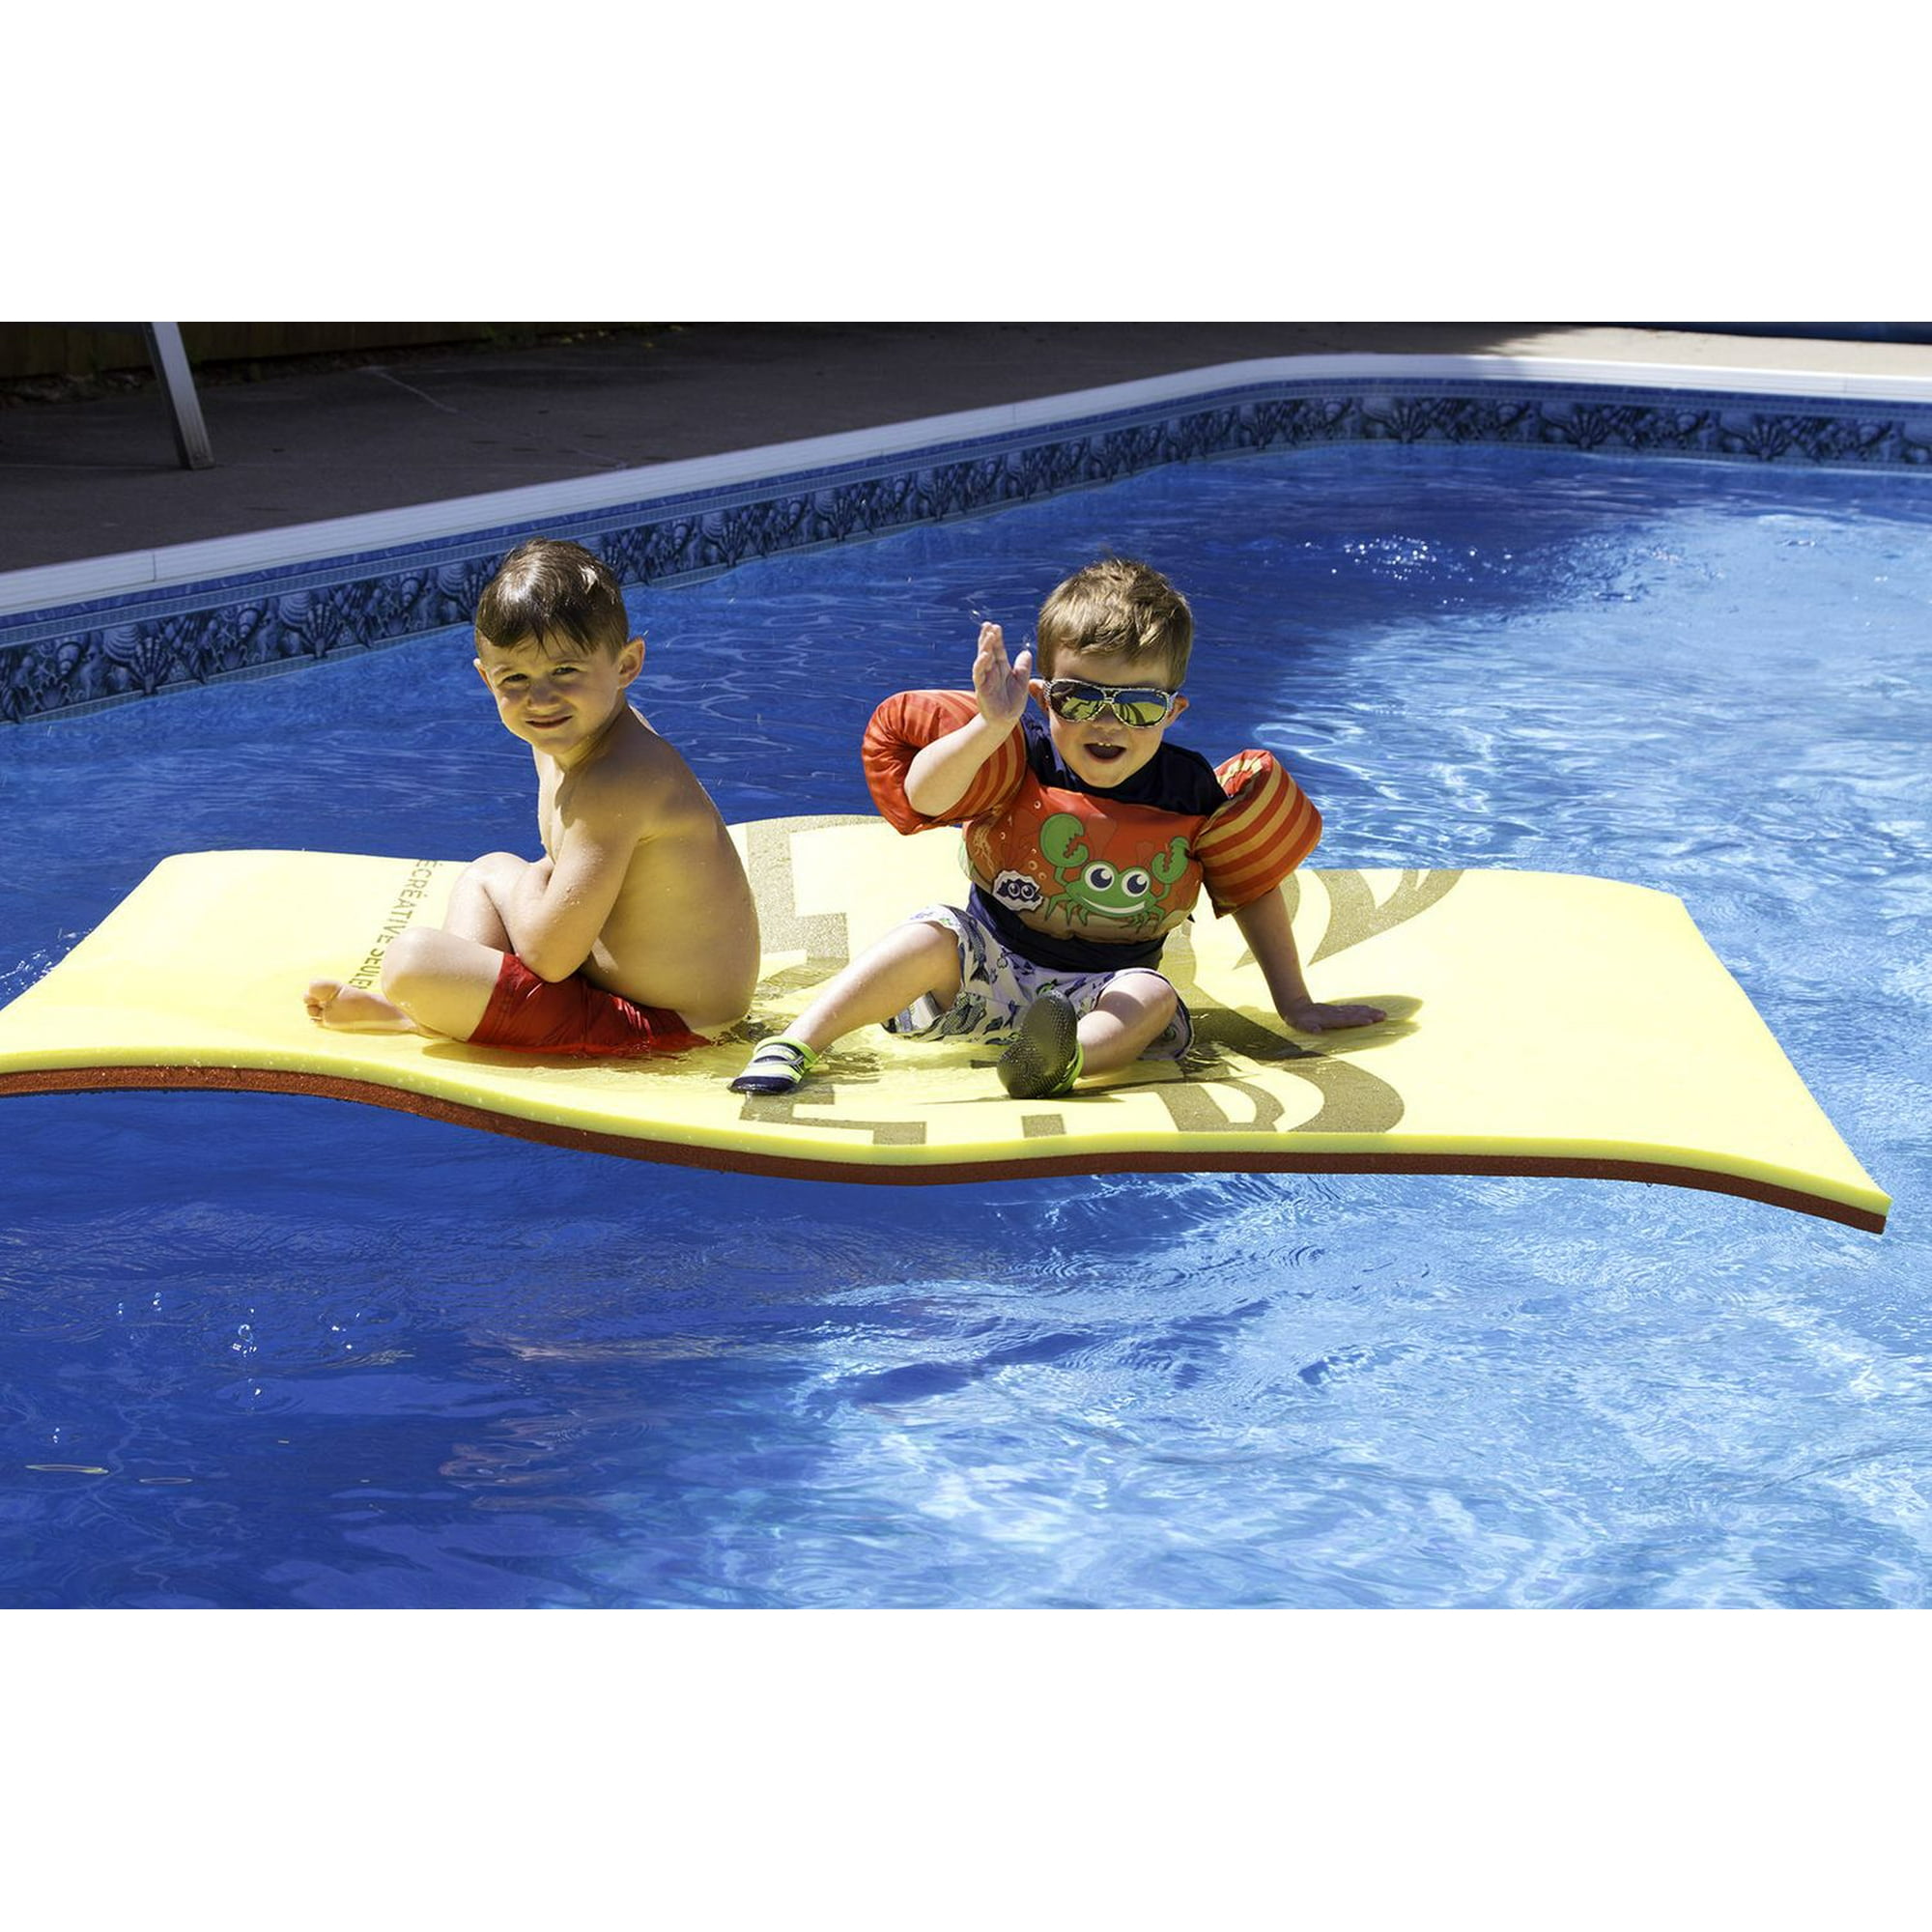 HOMCOM Roll-Up Pool Float Pad for Lakes, Oceans, & Pools, Water